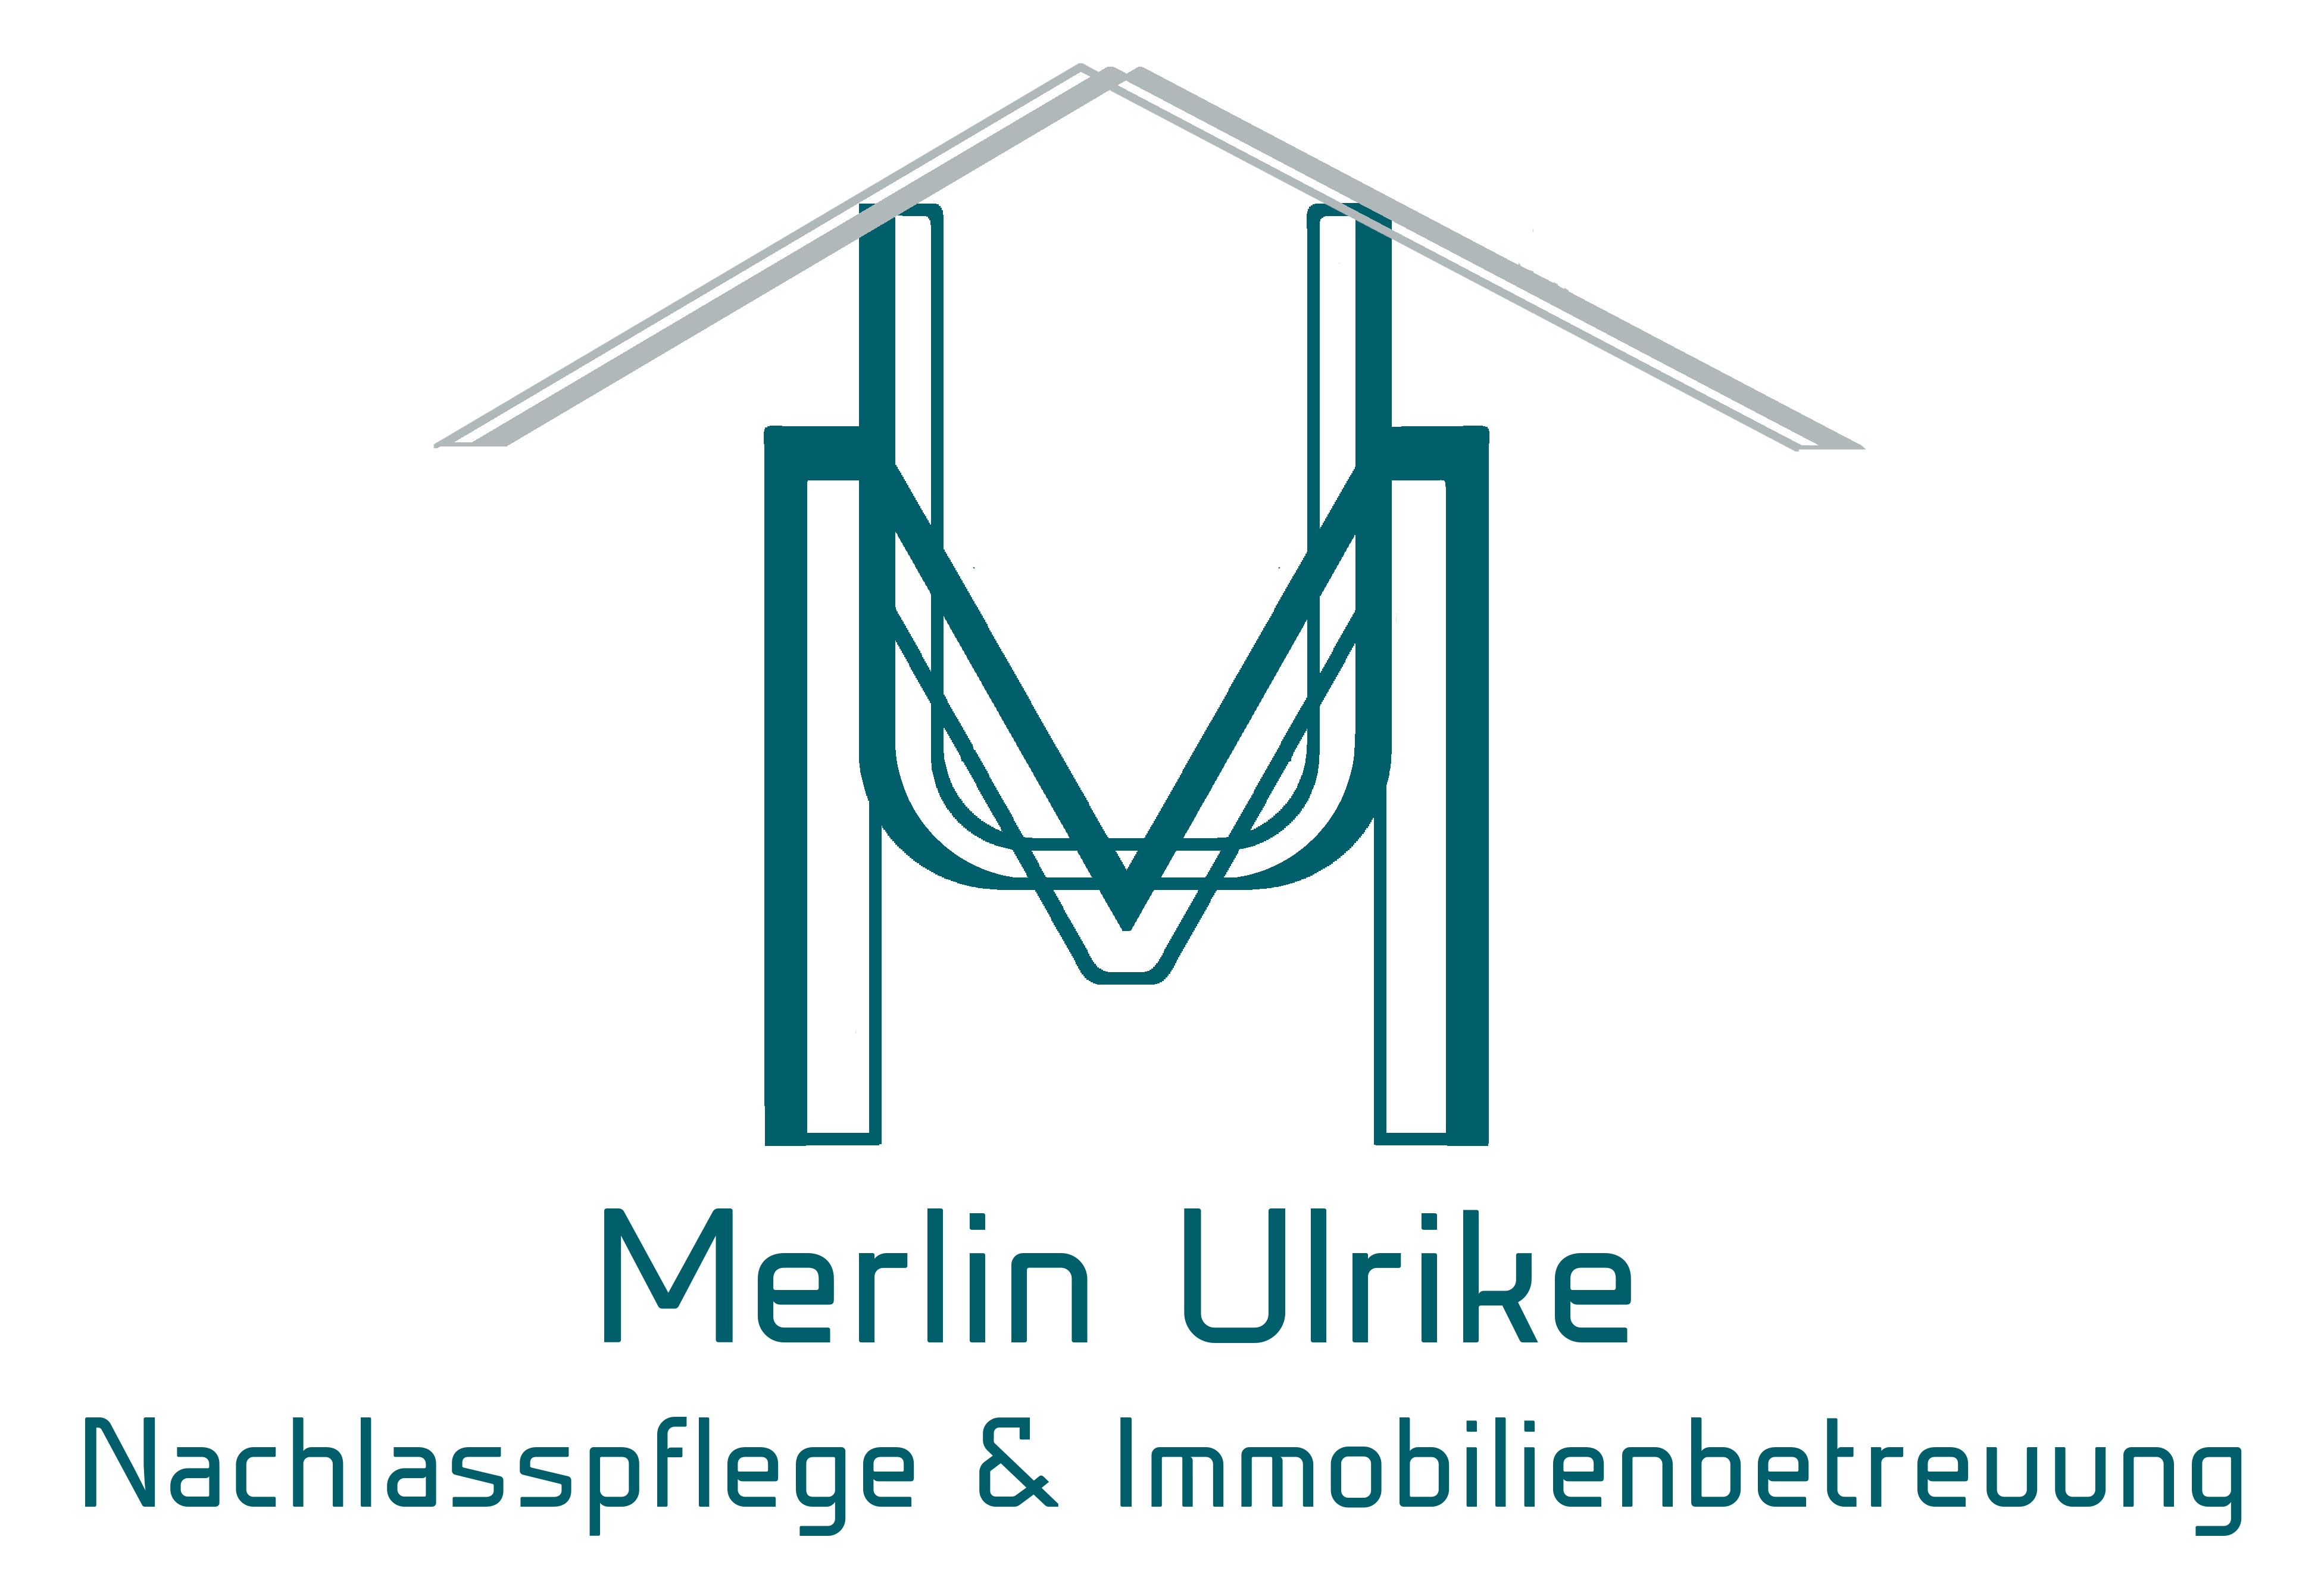 Merlin Ulrike